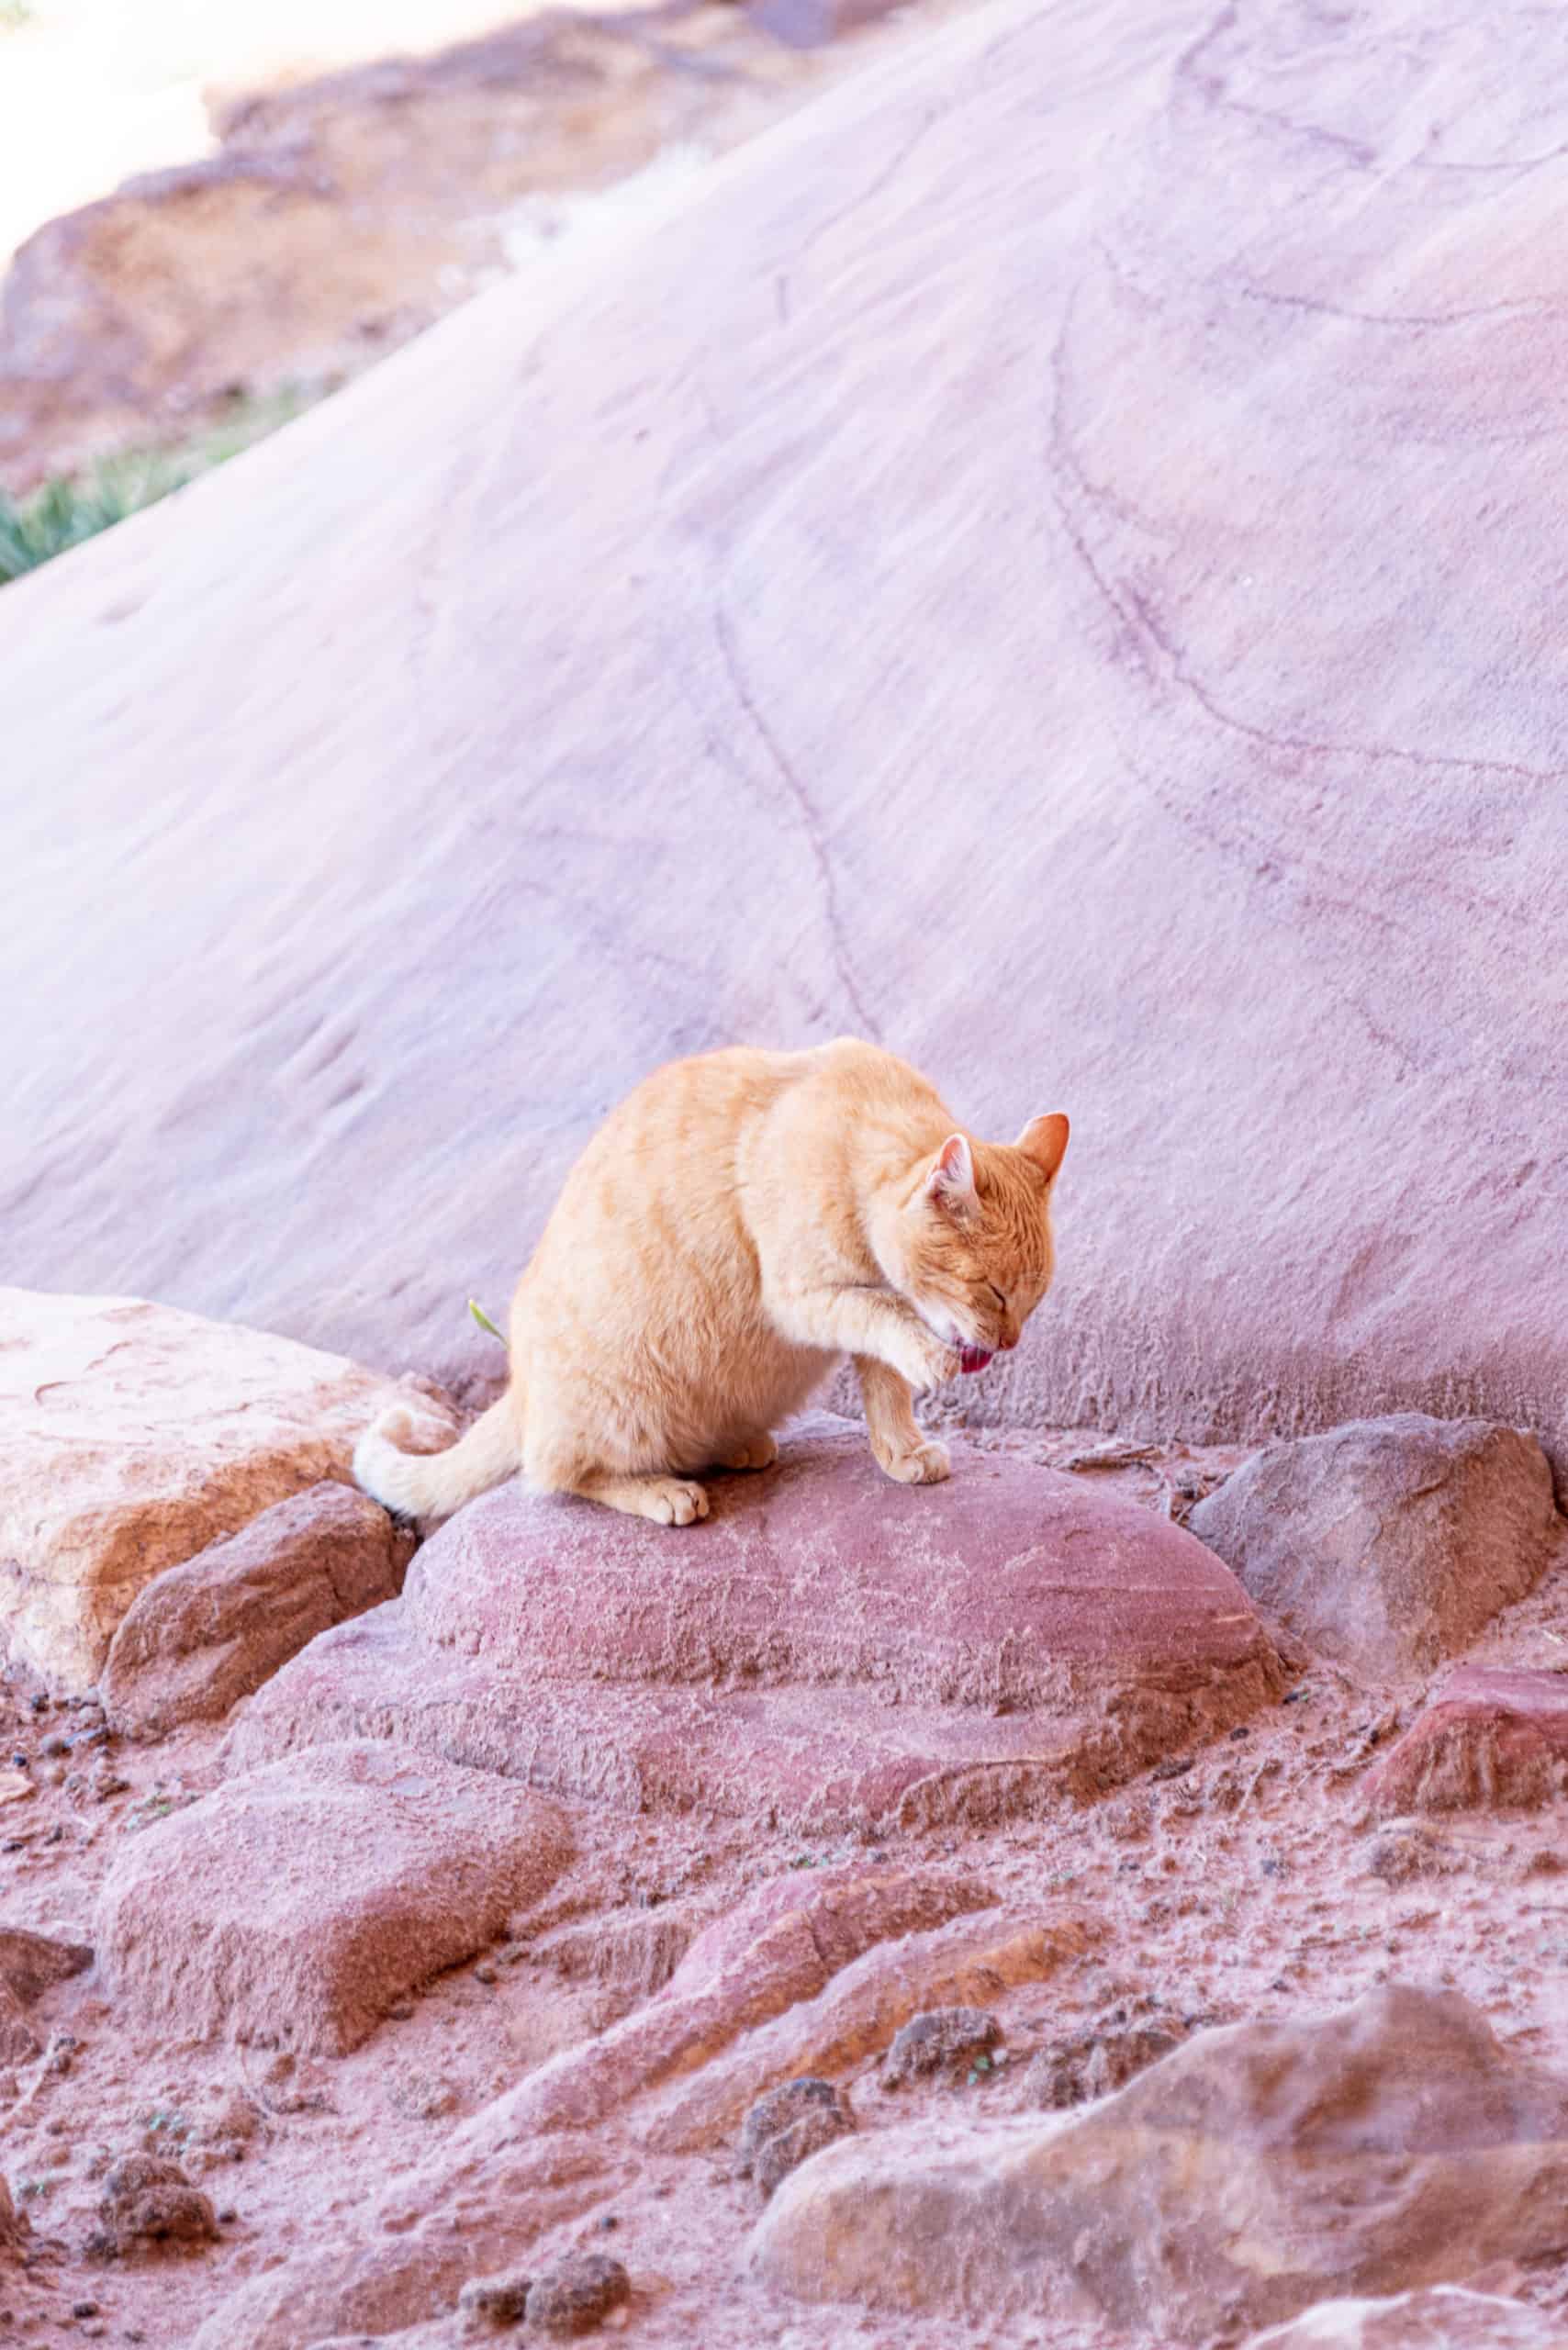 Jordan - Petra facts - cat washing paw